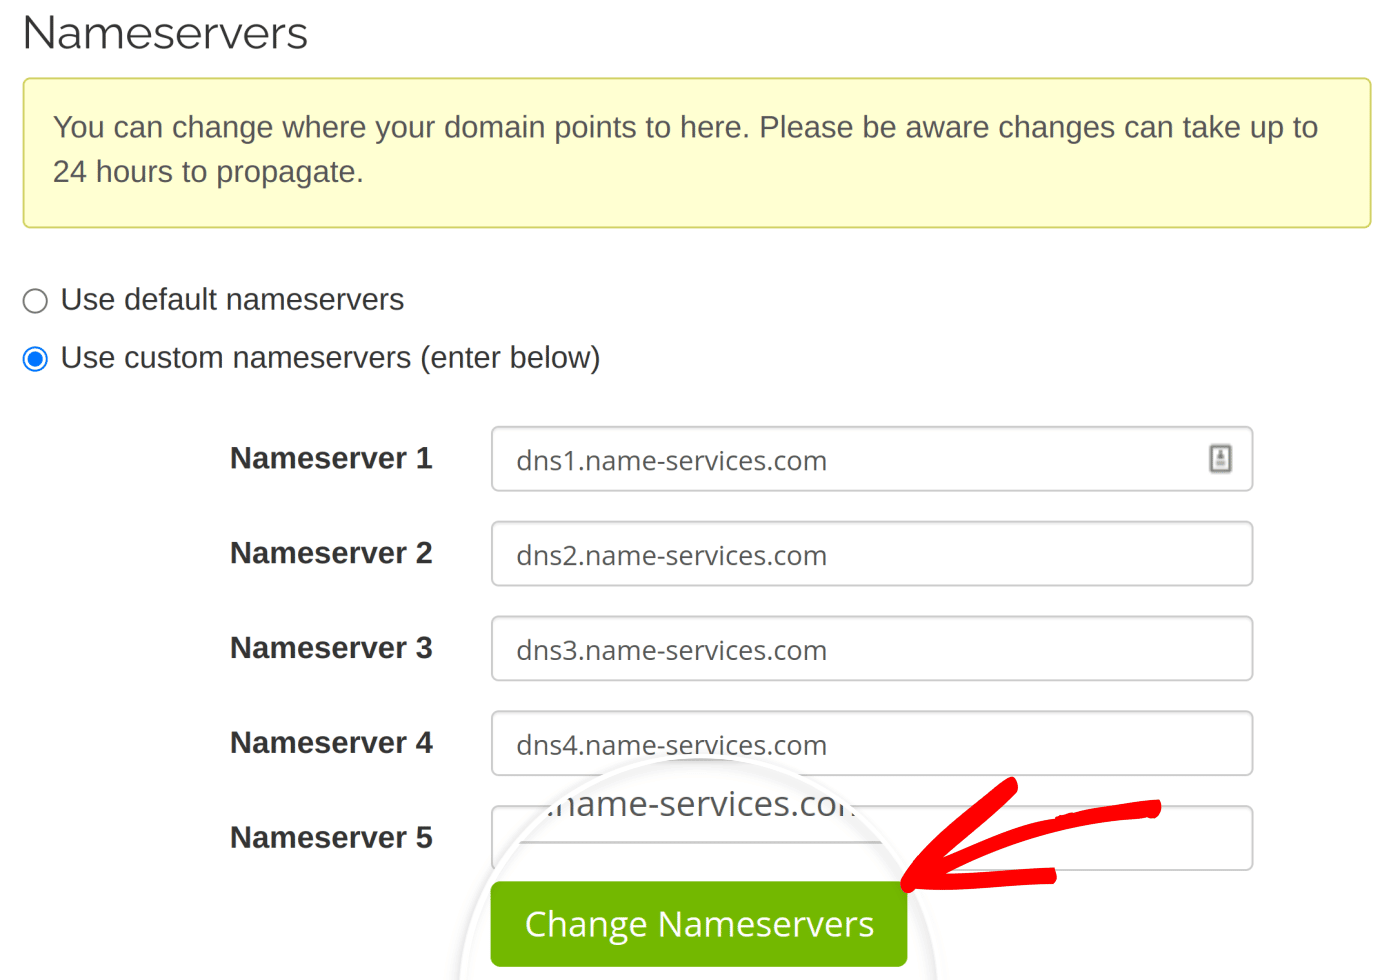 Click Change Nameservers